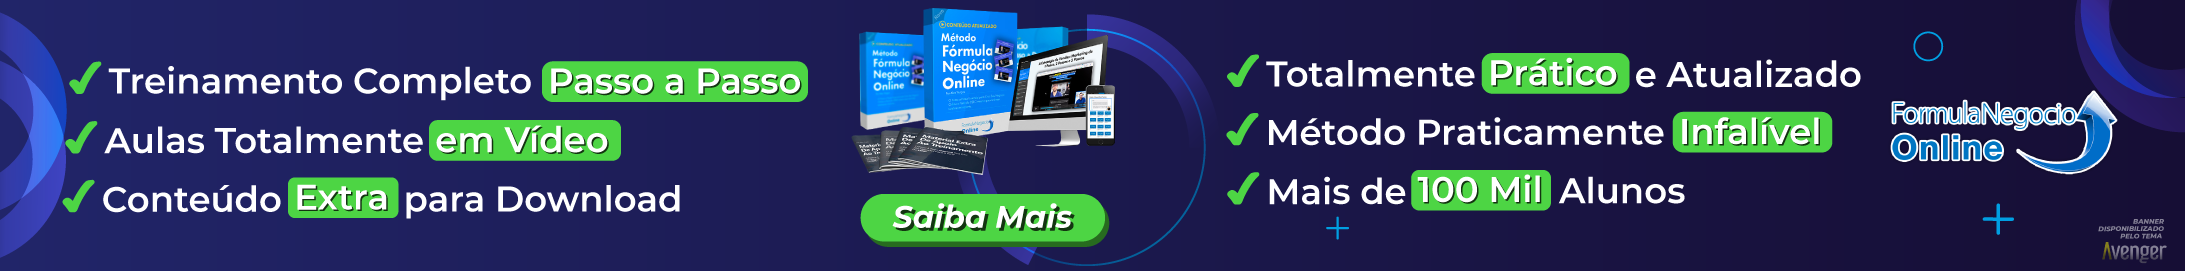 fno 728 90 - Alternativas ao Clickbank (Estados Unidos) e Hotmart (Brasil)